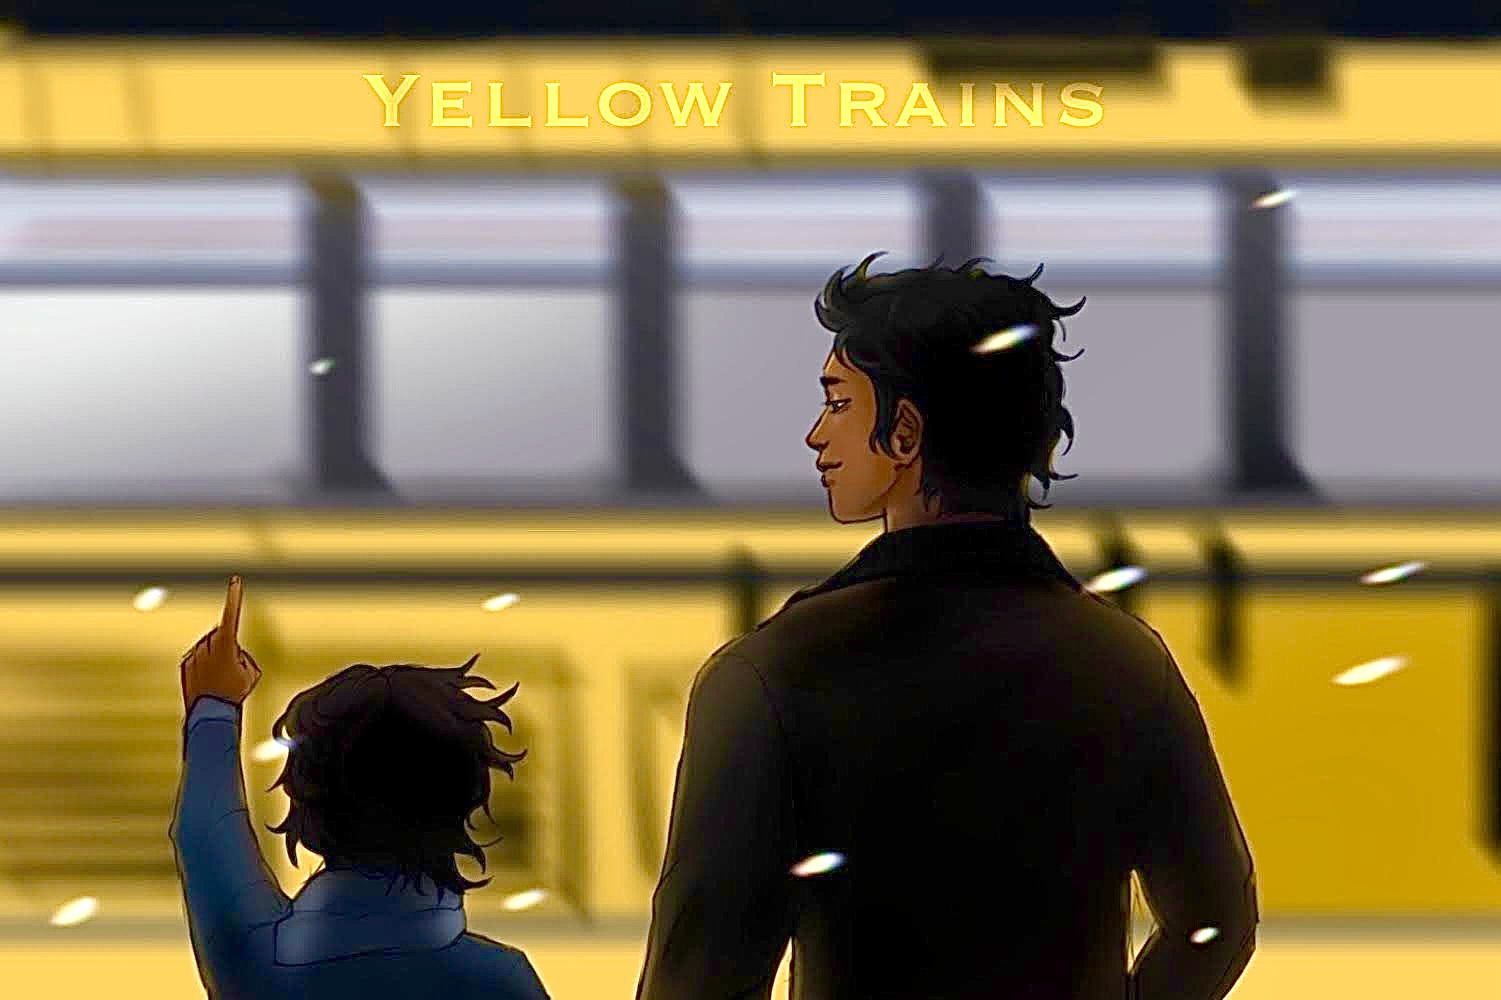 LitNFT #27: Yellow Trains by Jacob Schlote